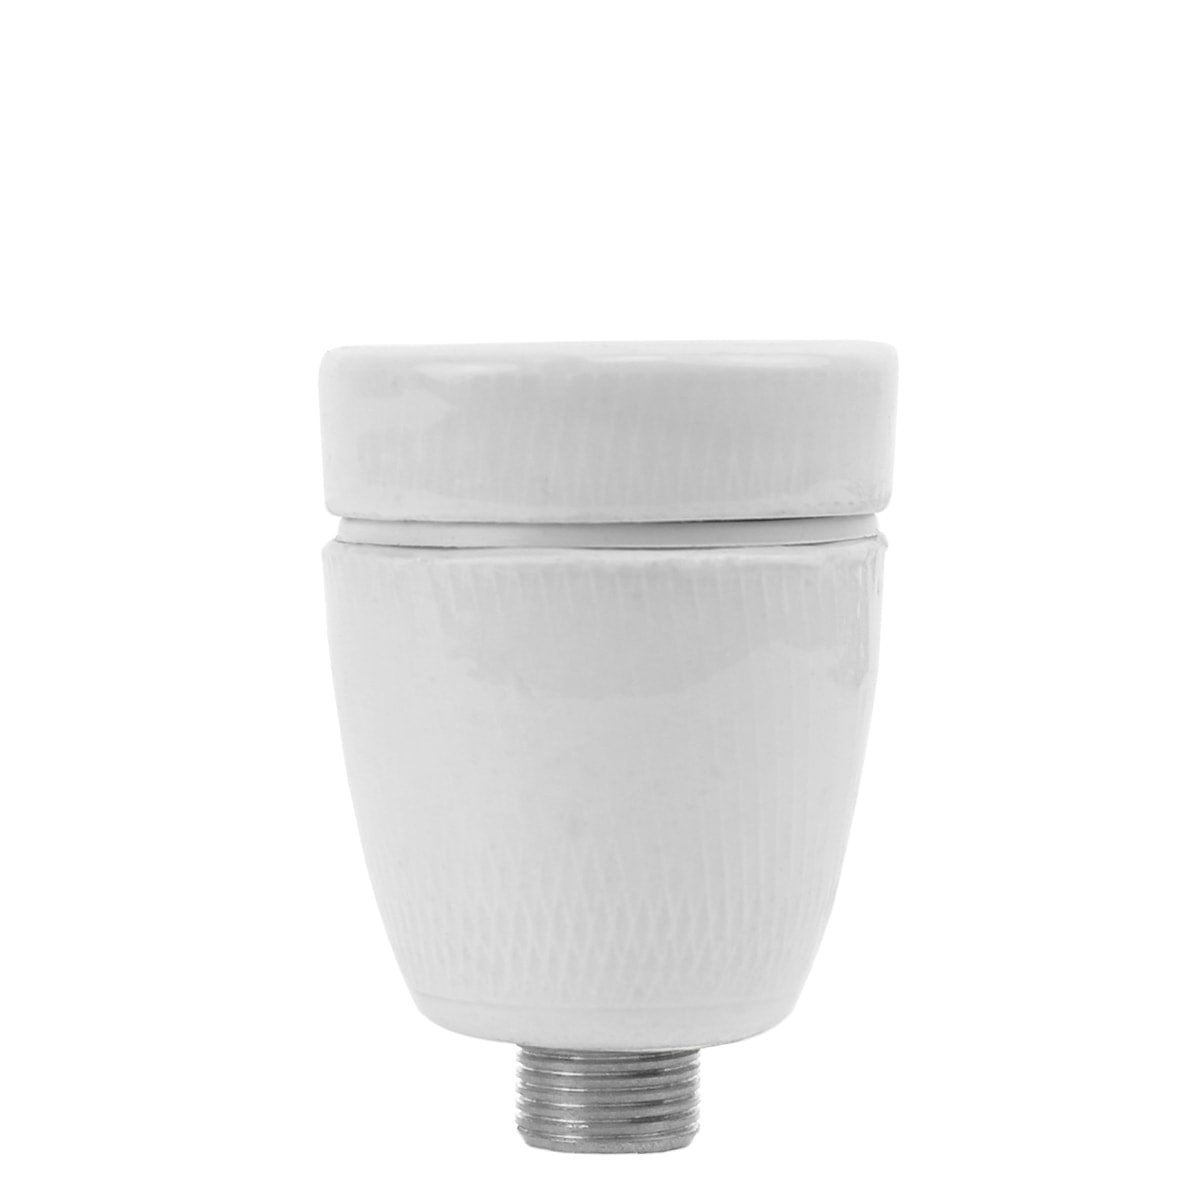 Buitenverlichting Onderdelen Losse porseleinen lamphouder E27 - Ø 10 mm